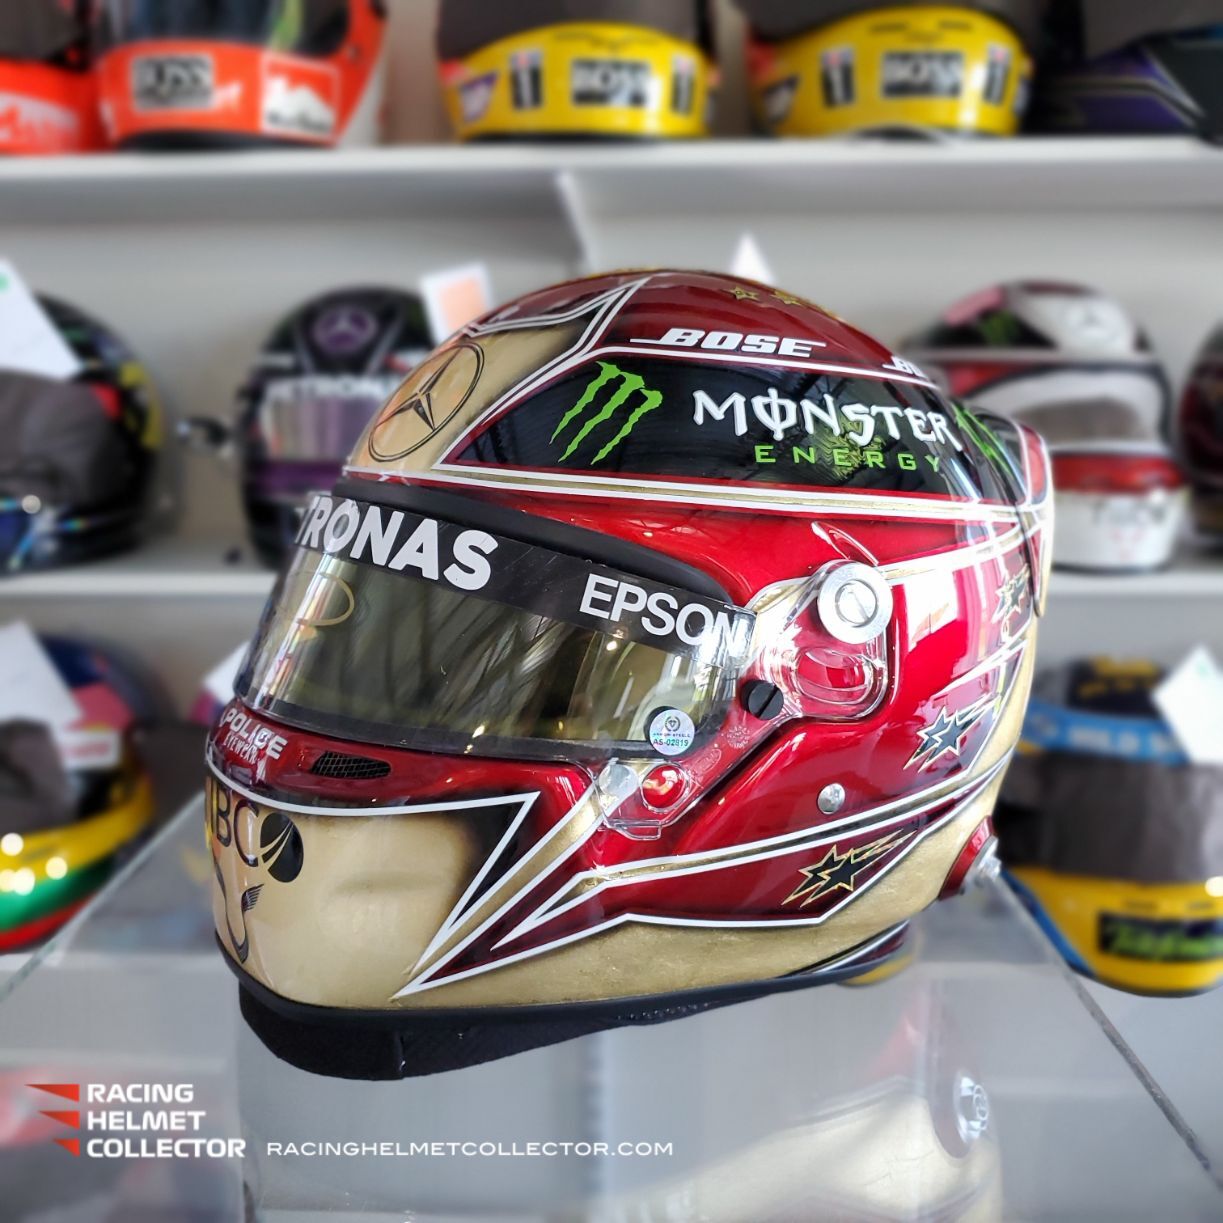 Glitz Customs - Lewis Hamilton with custom made helmet